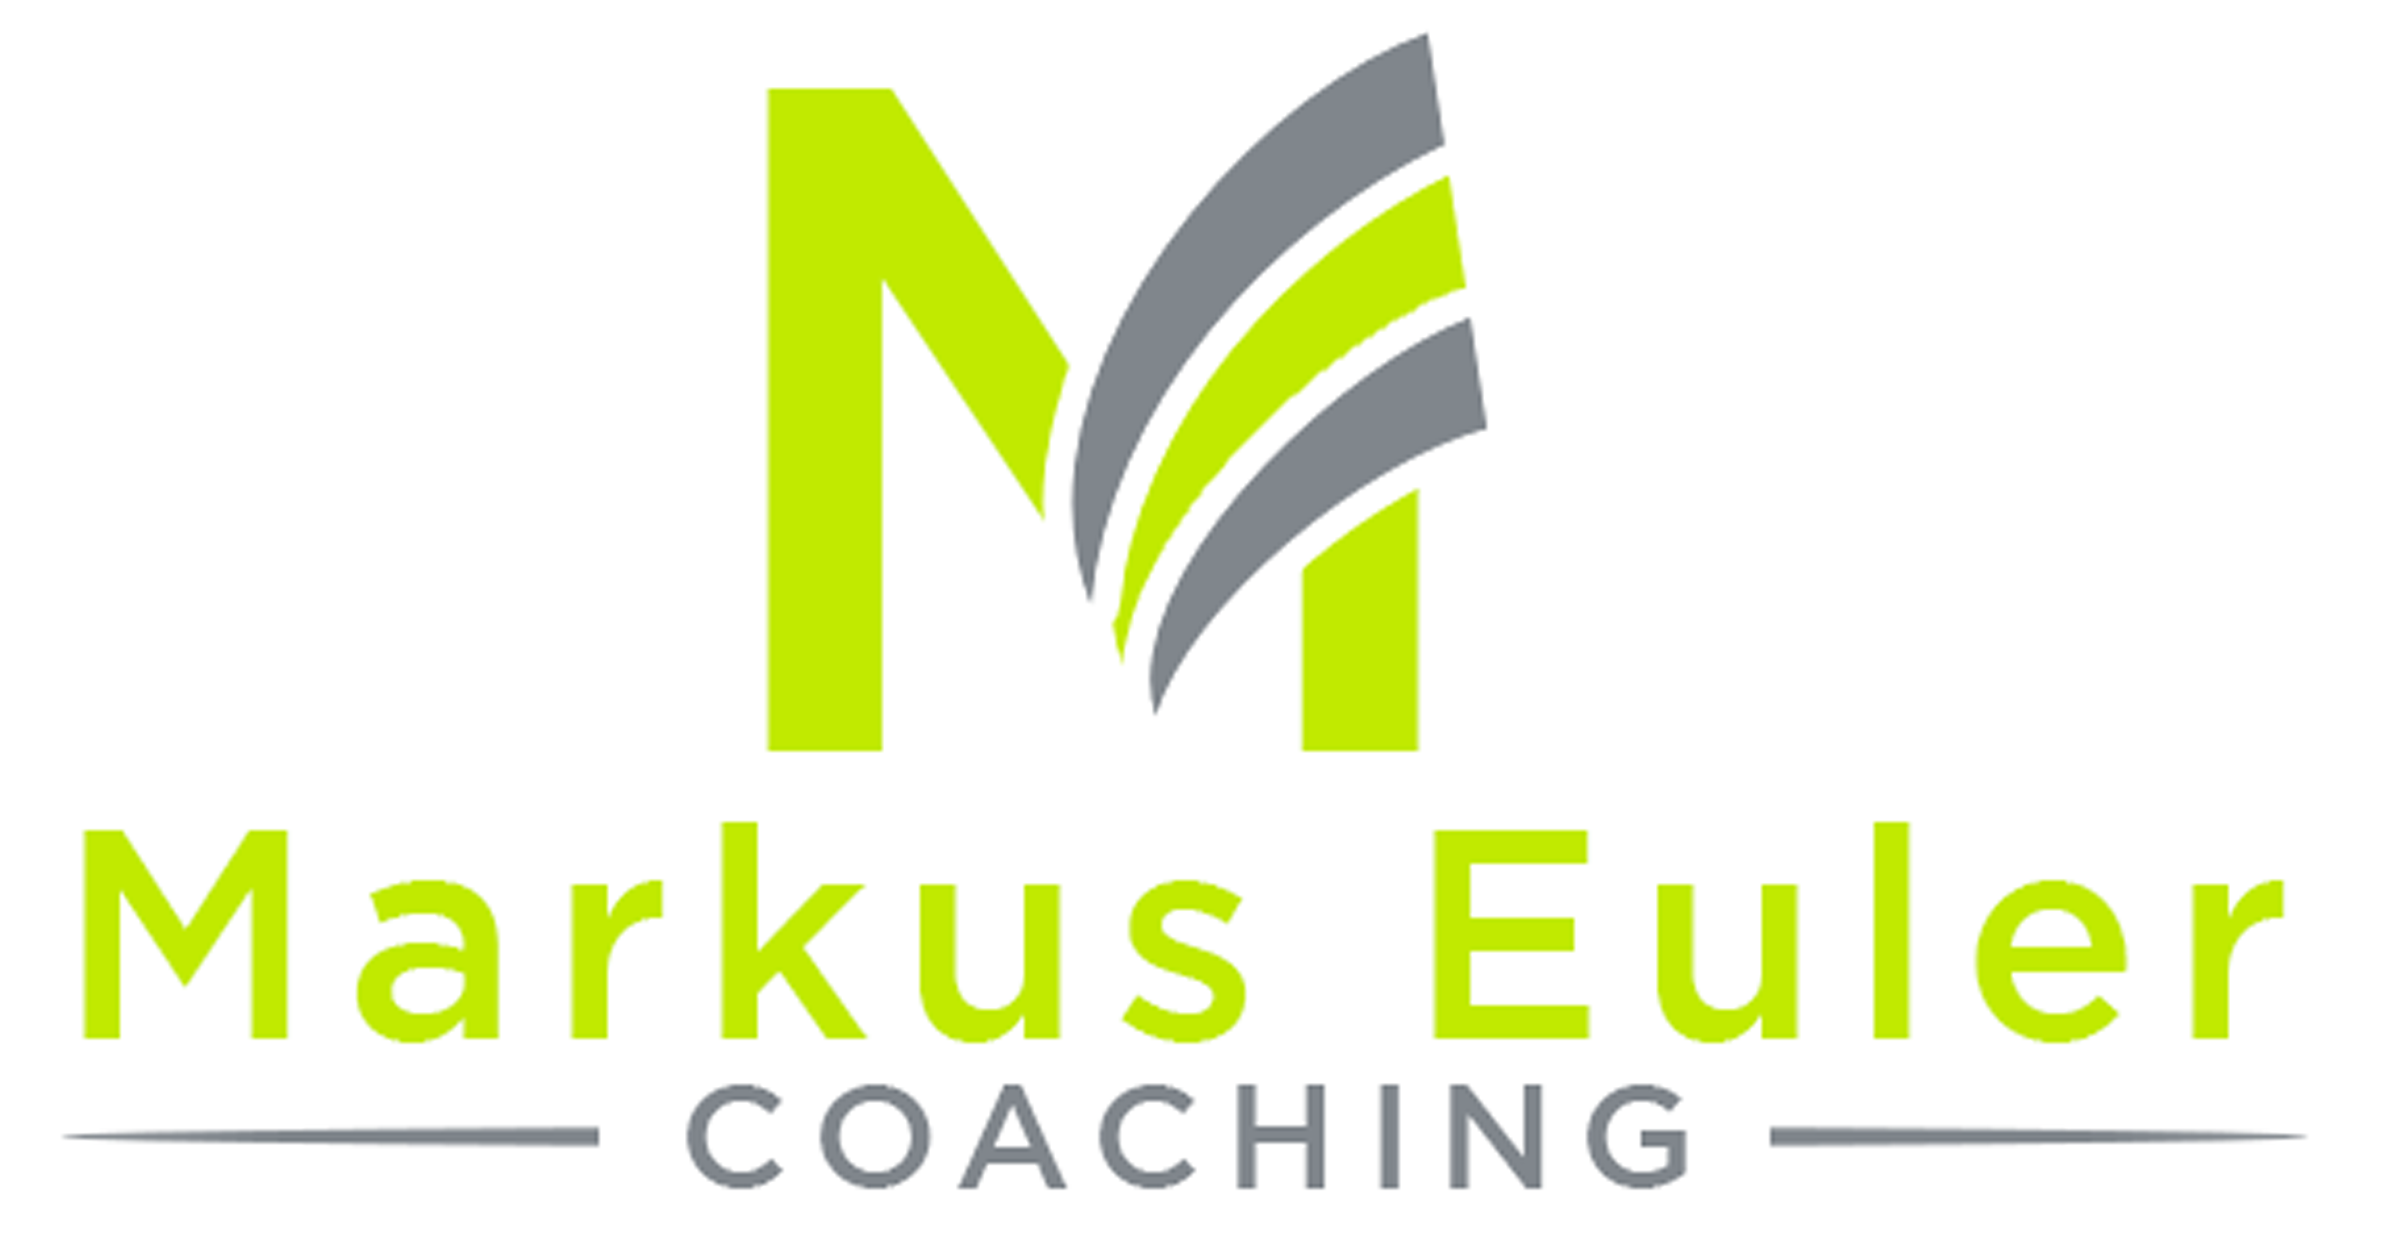 Markus Euler Coaching